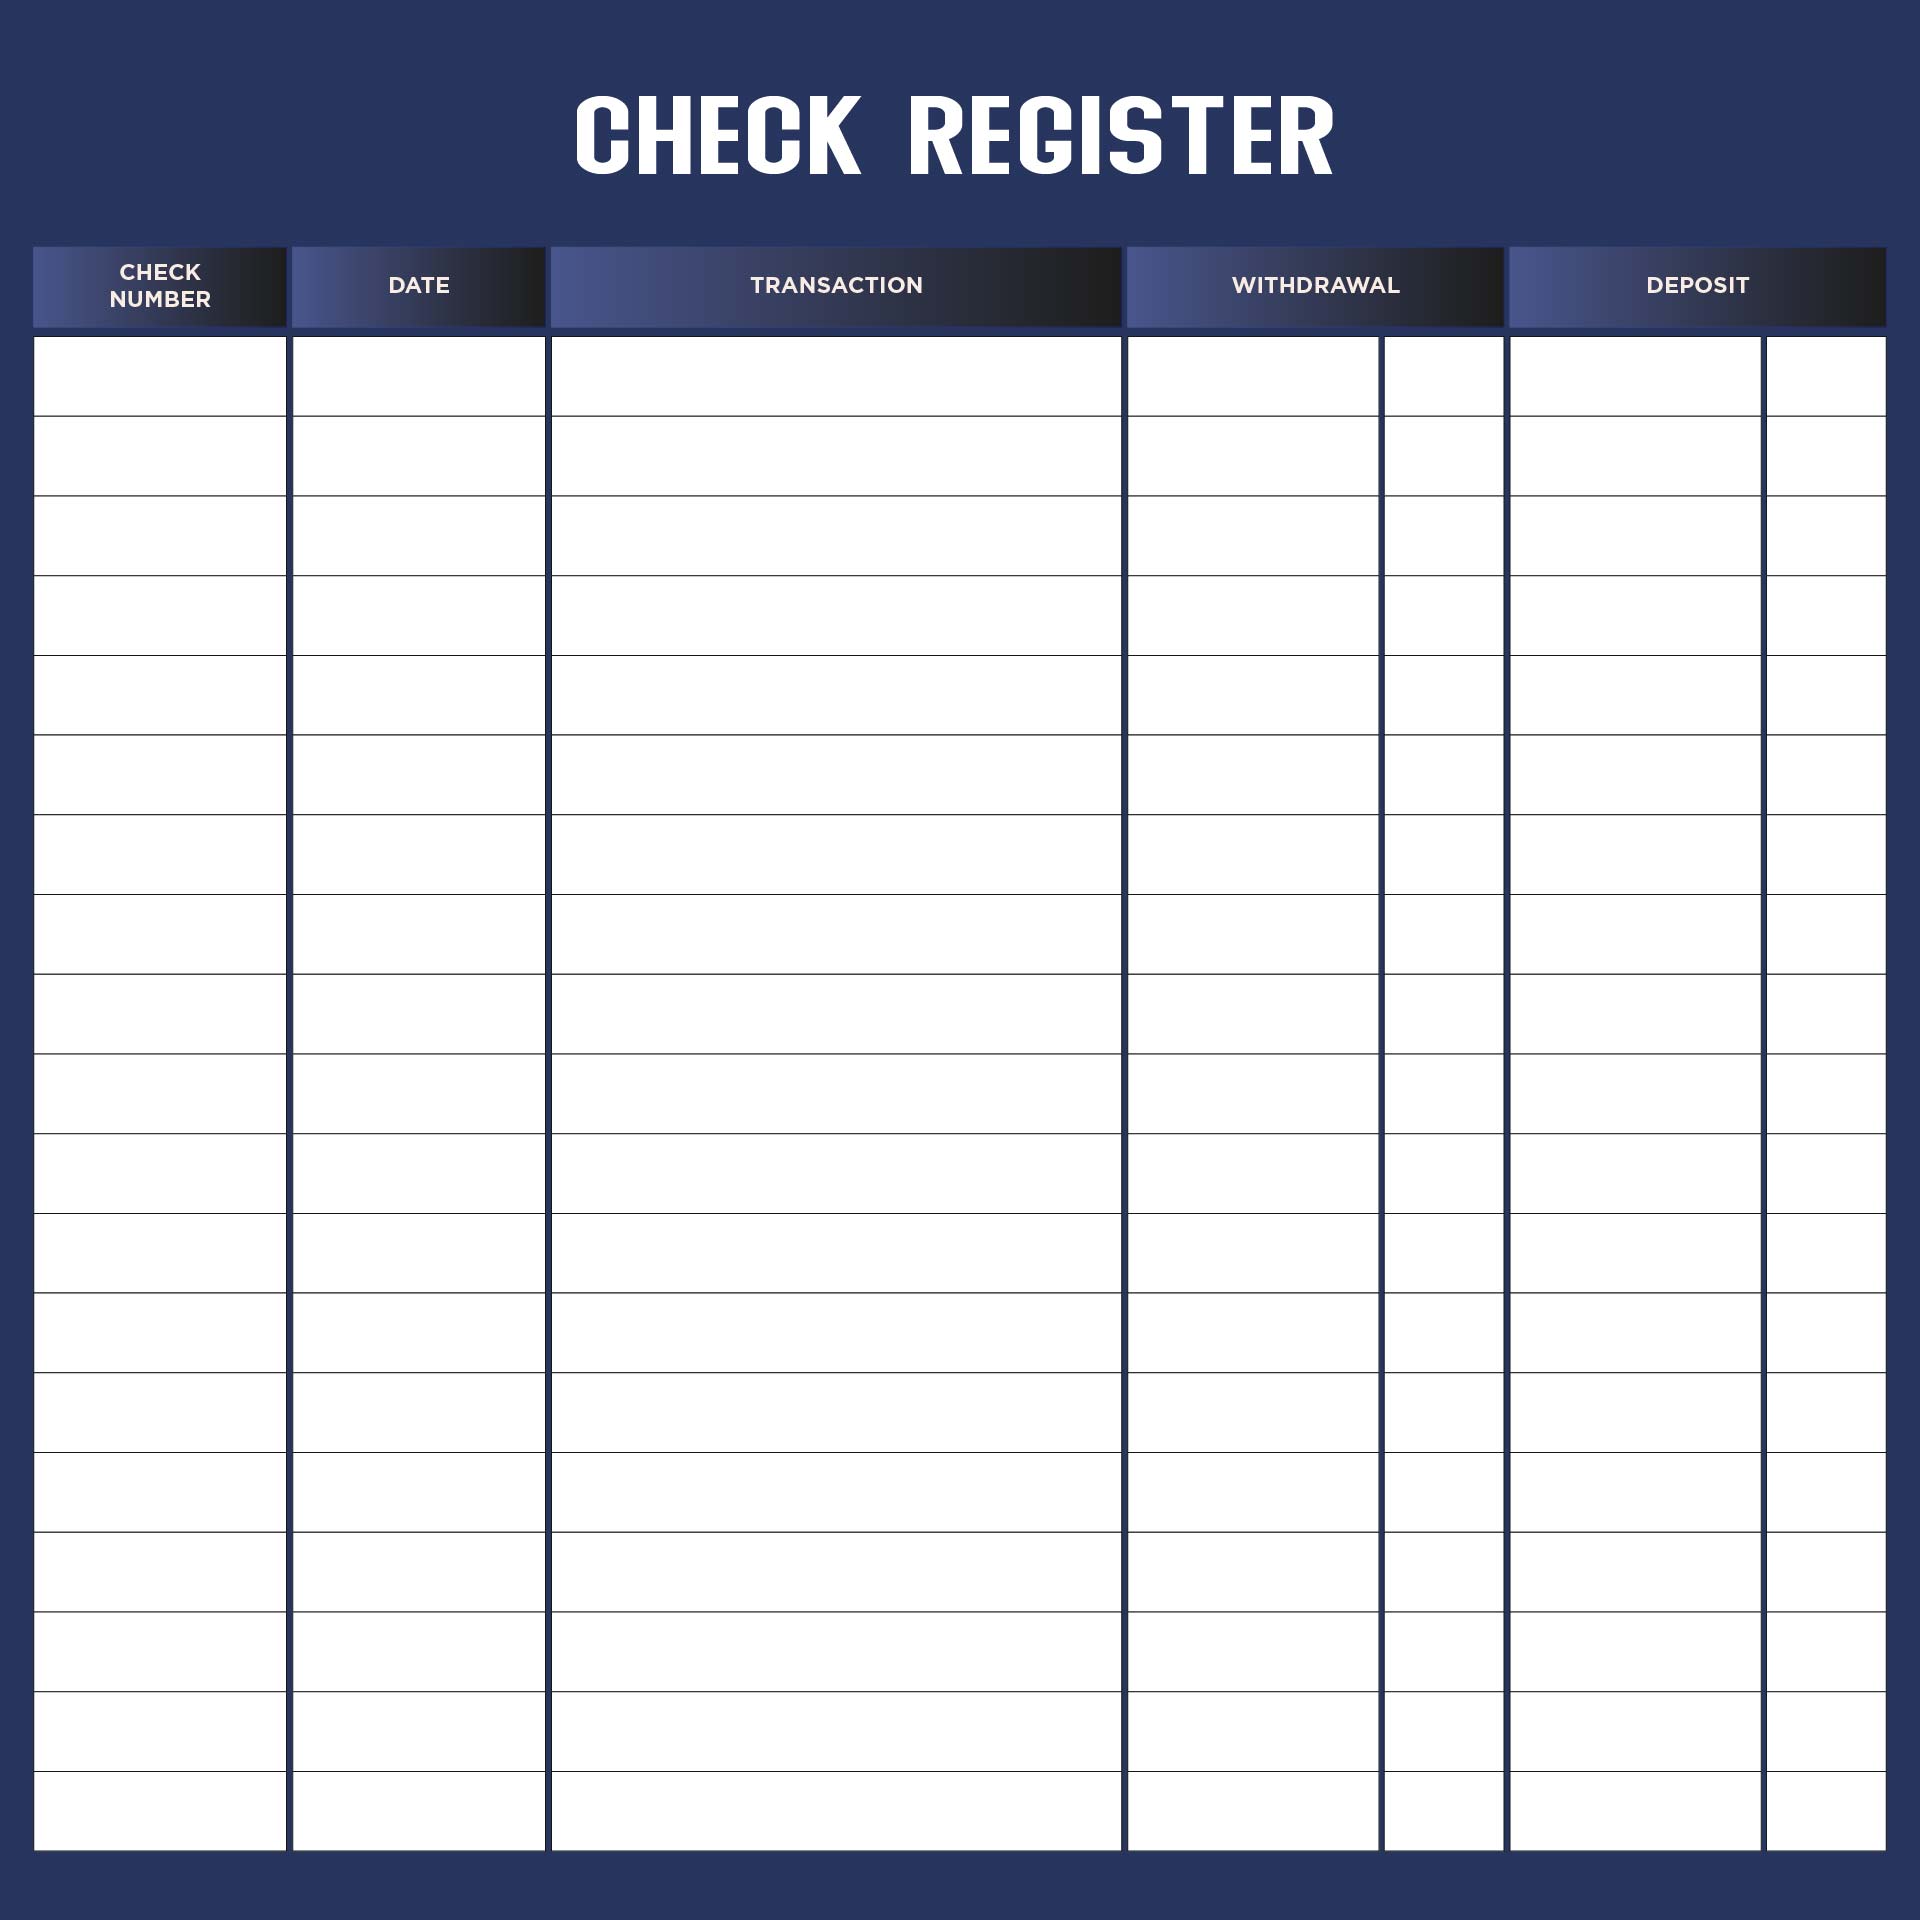 Printable Checkbook Register Worksheet